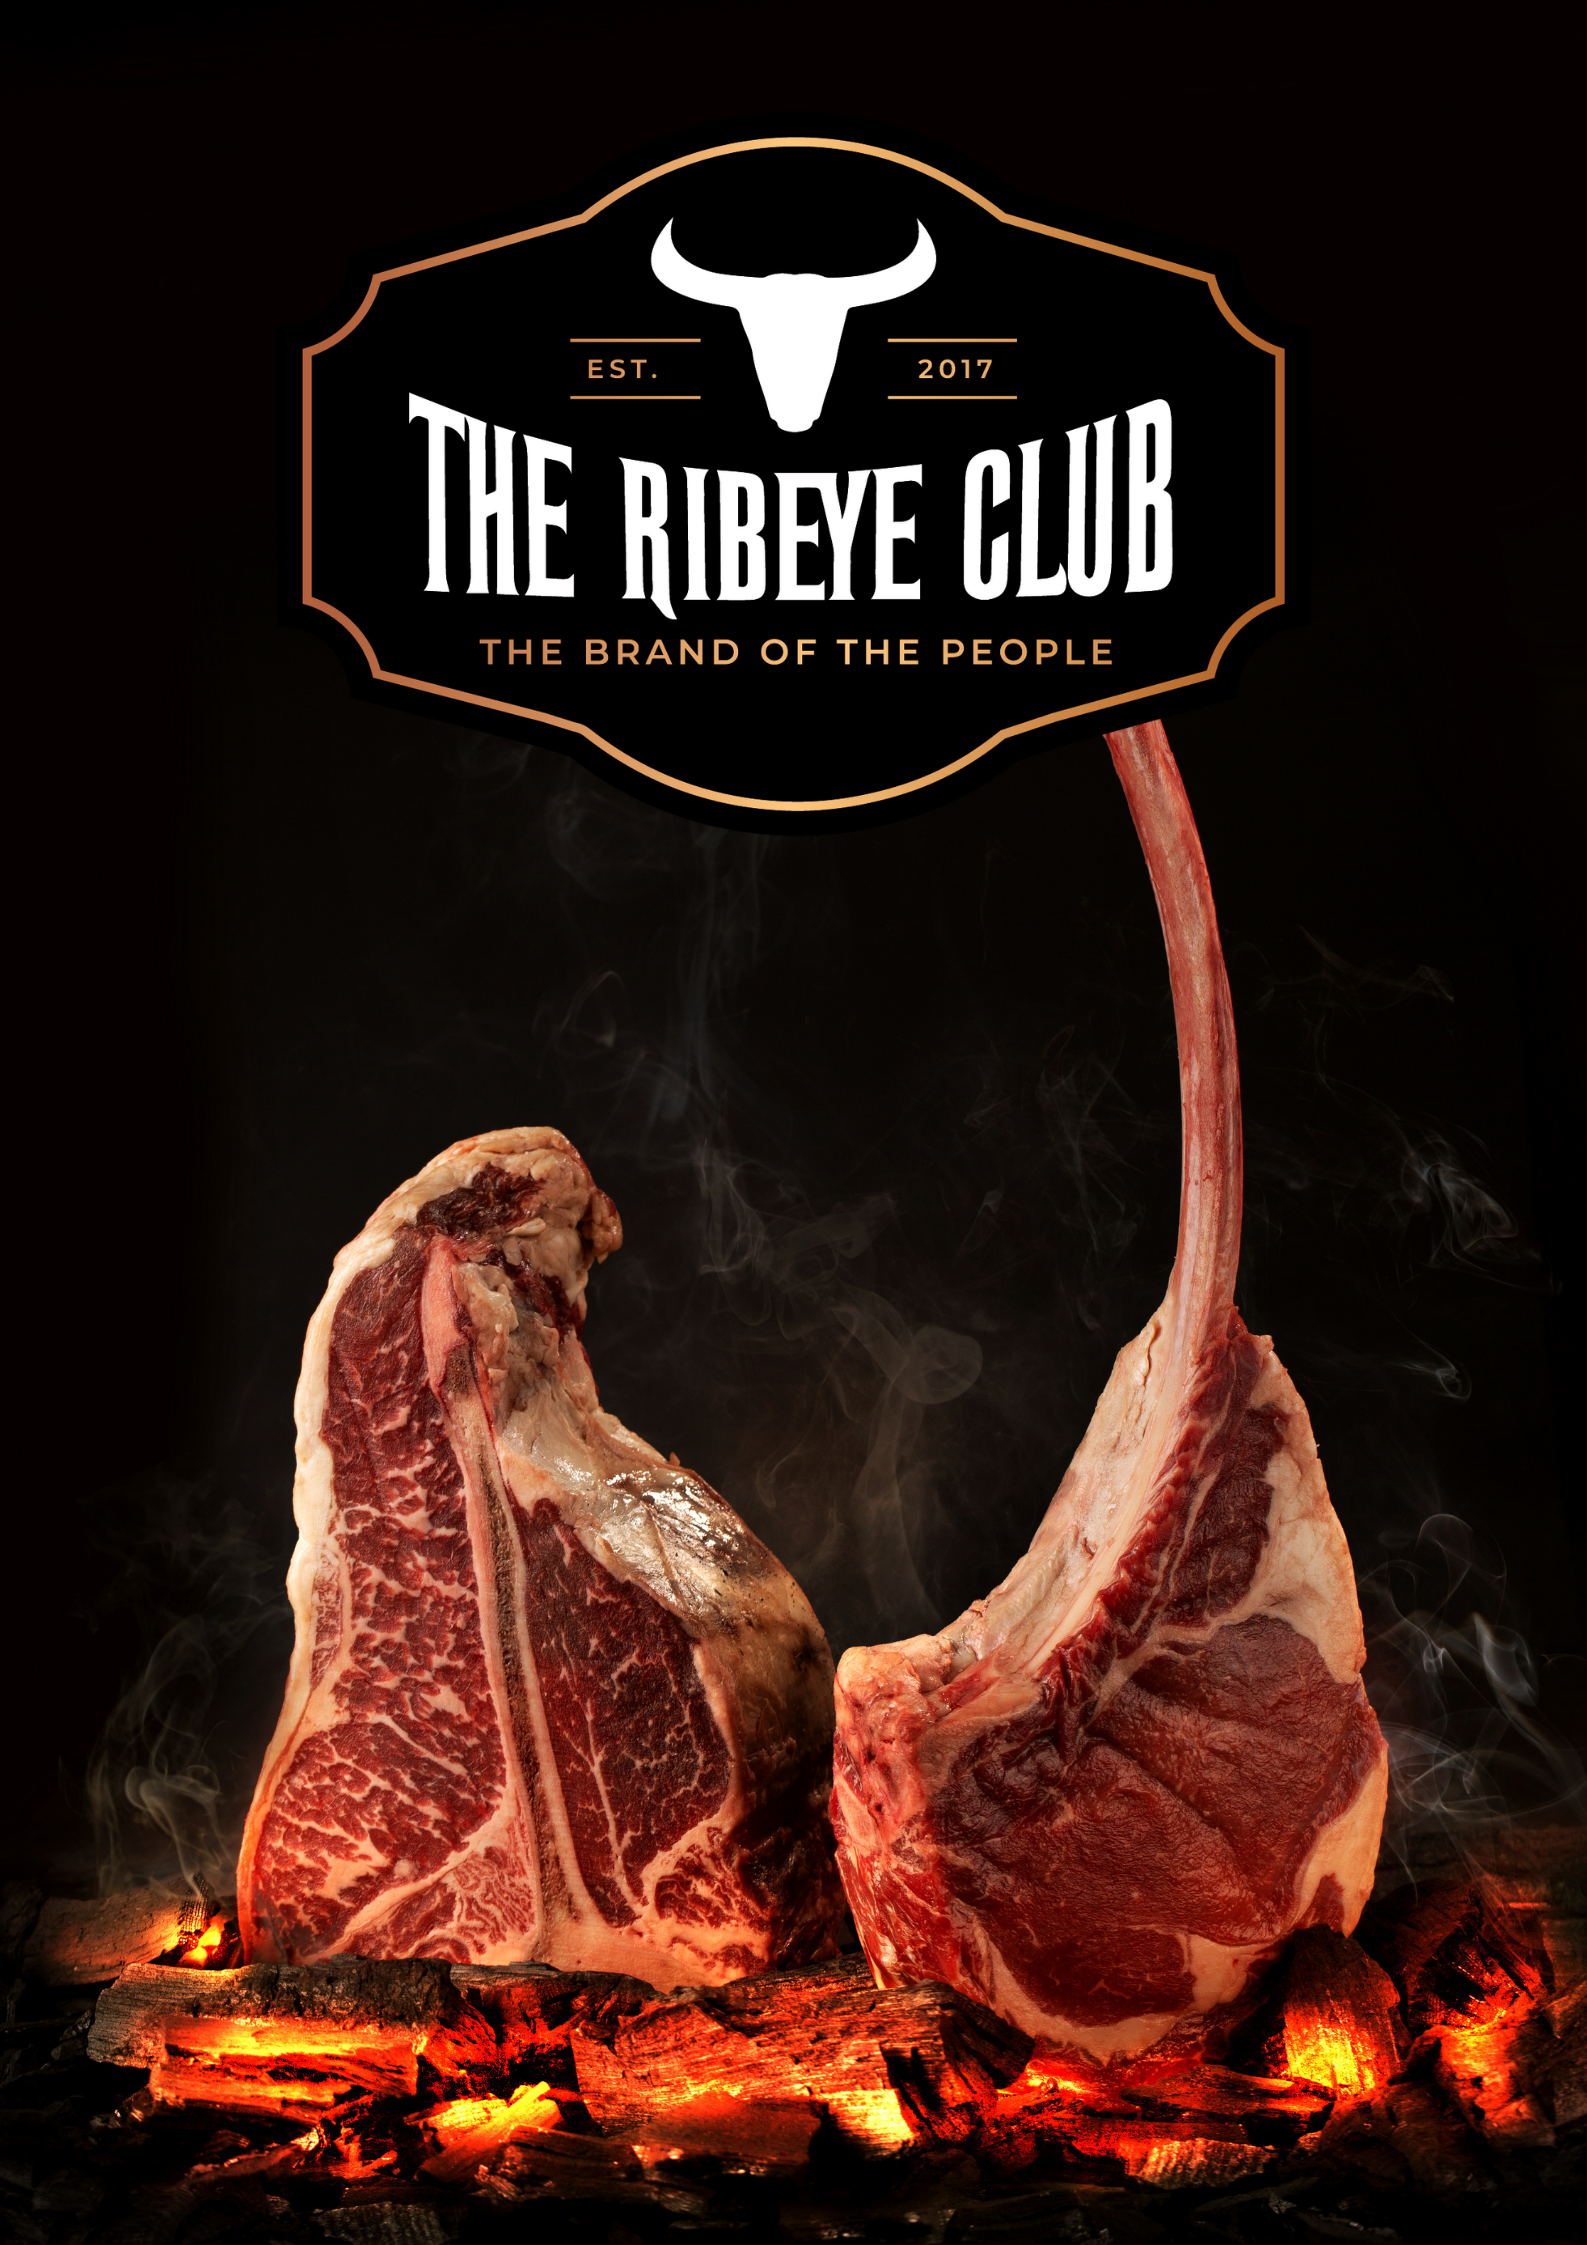 The Ribeye Club poster